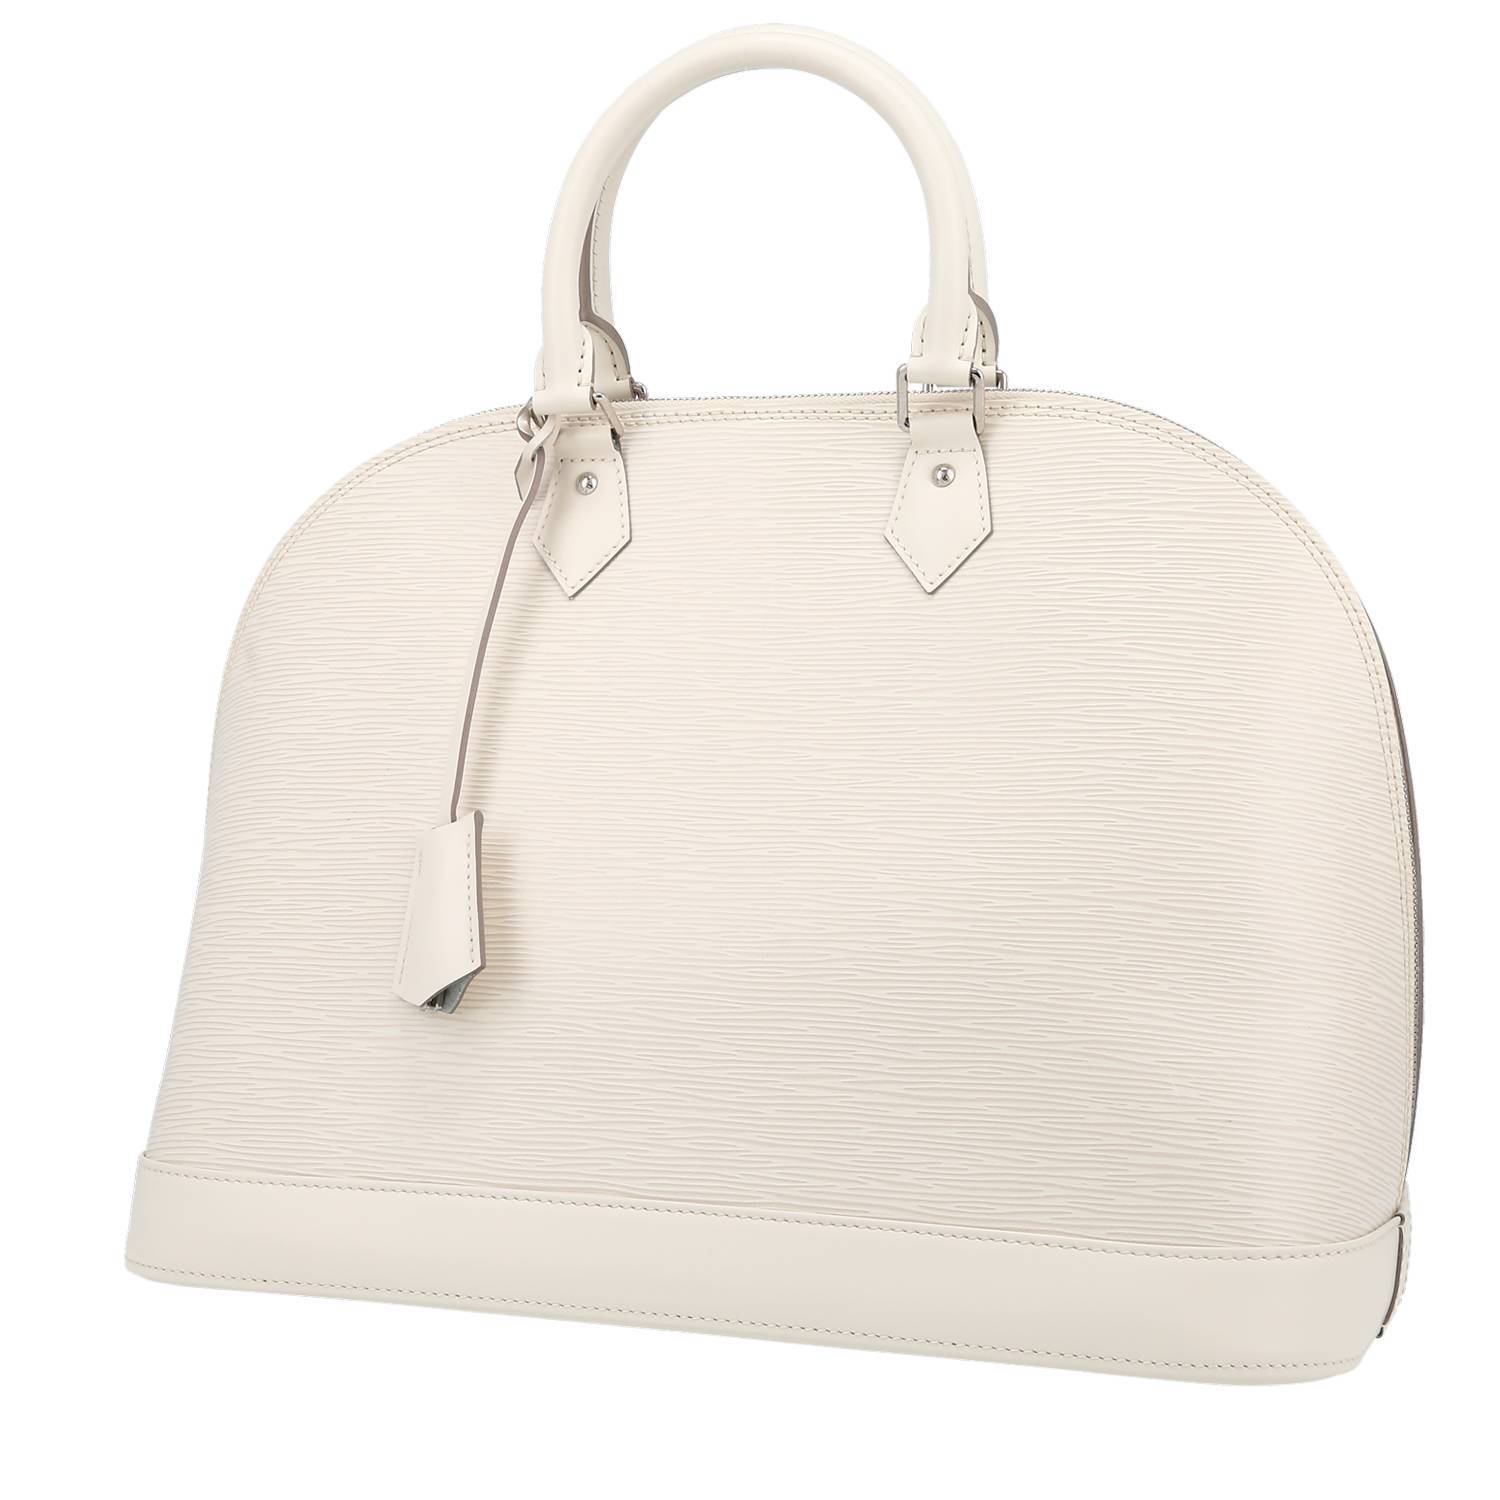 Louis Vuitton Alma Medium Model Handbag in Silver Epi Leather